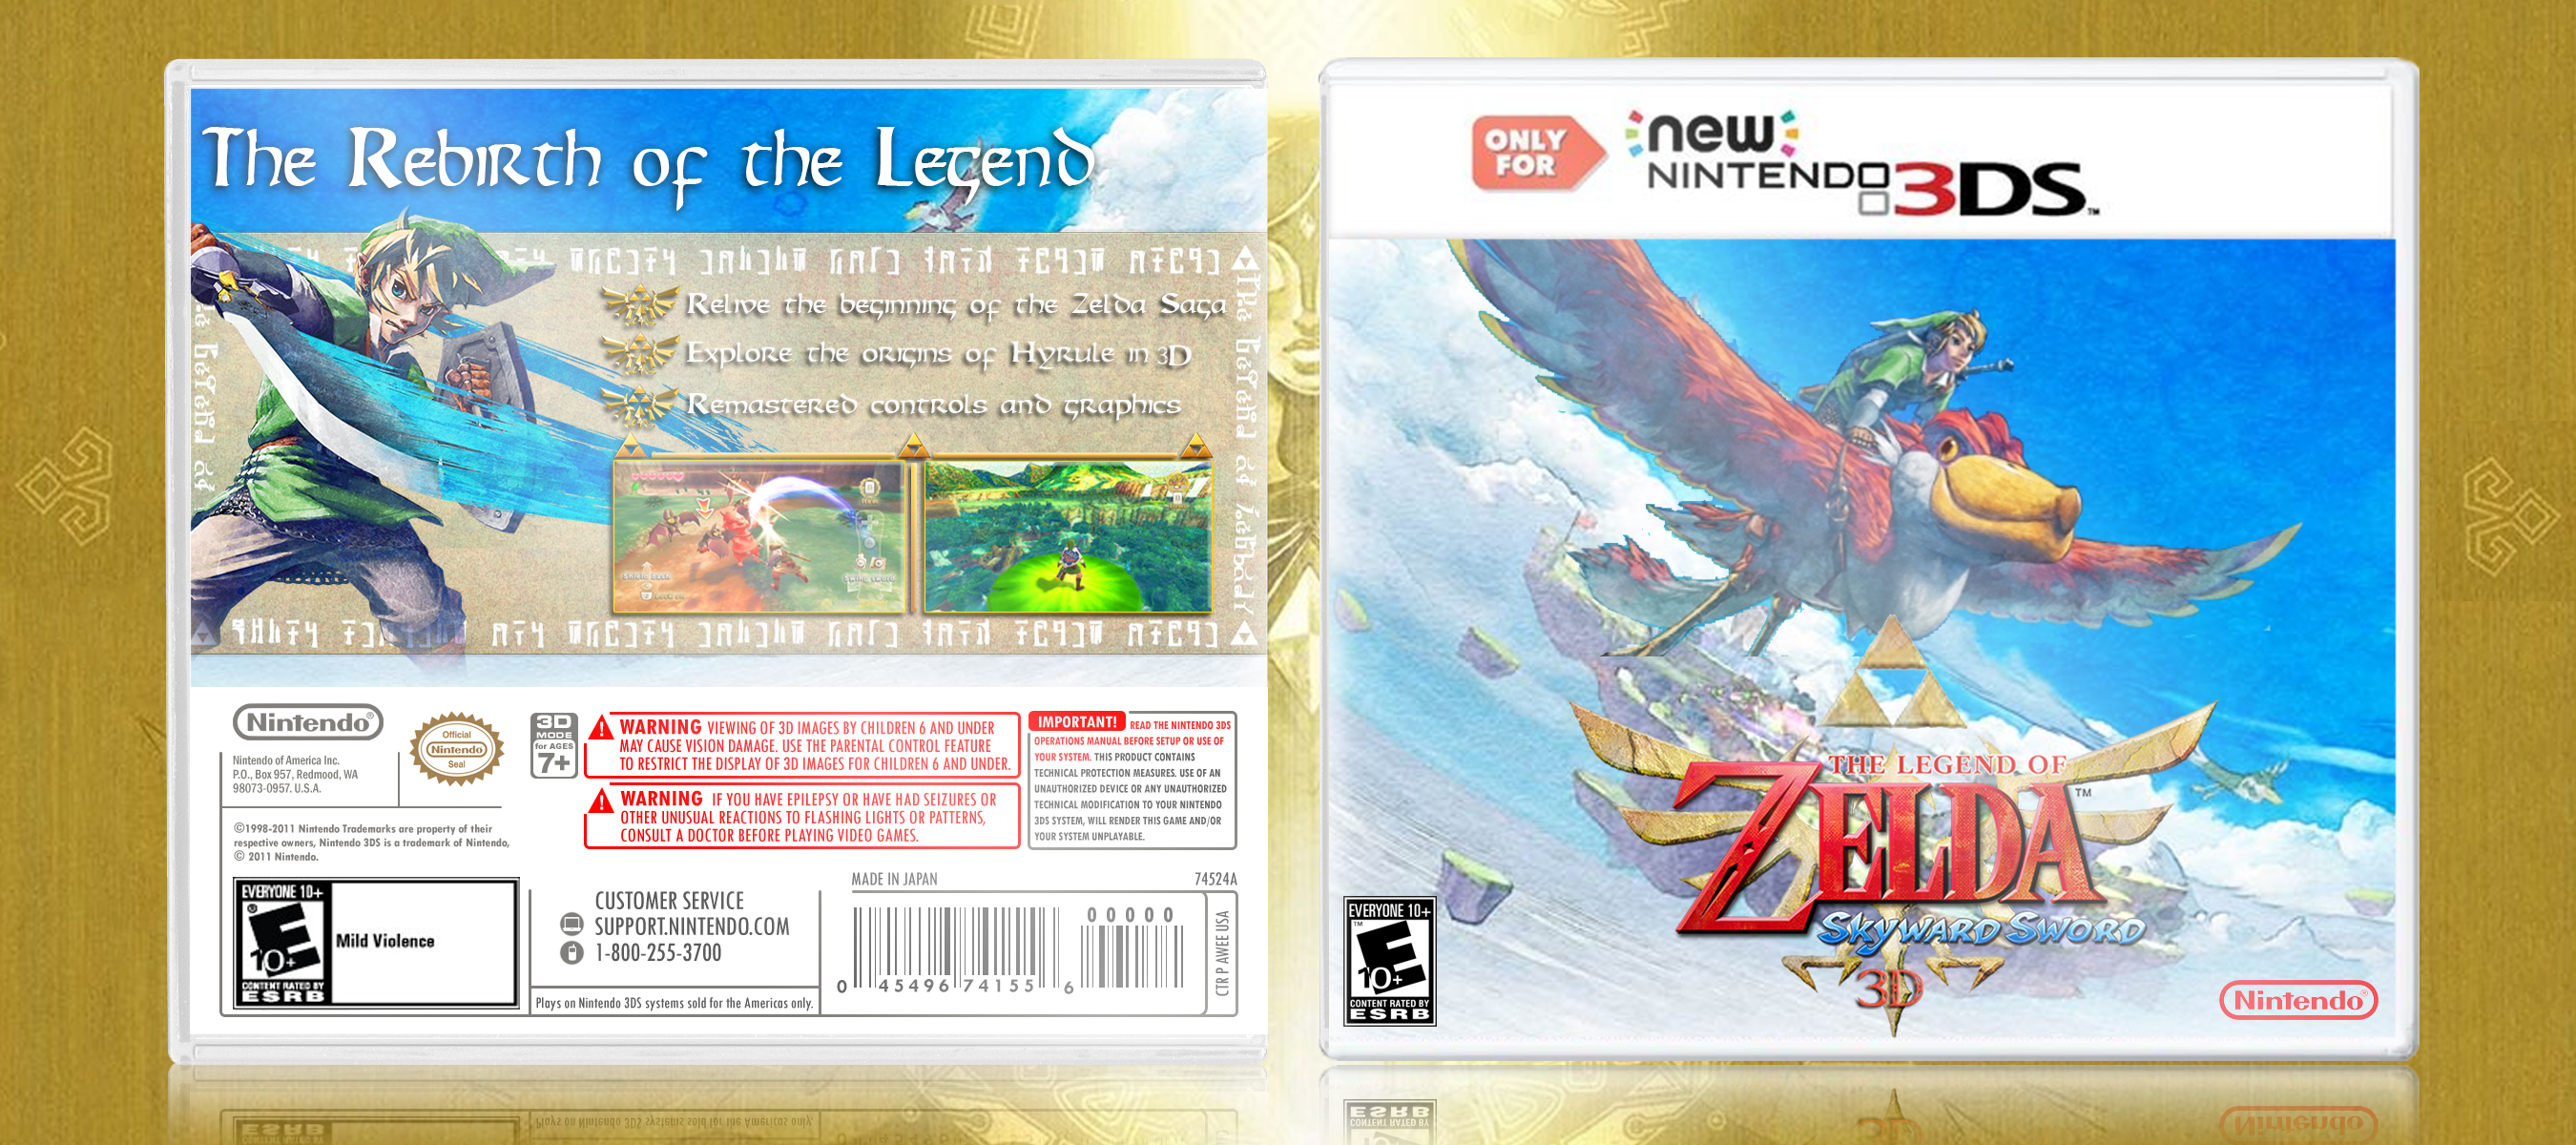 The Legend of Zelda: Skyward Sword 3D box cover